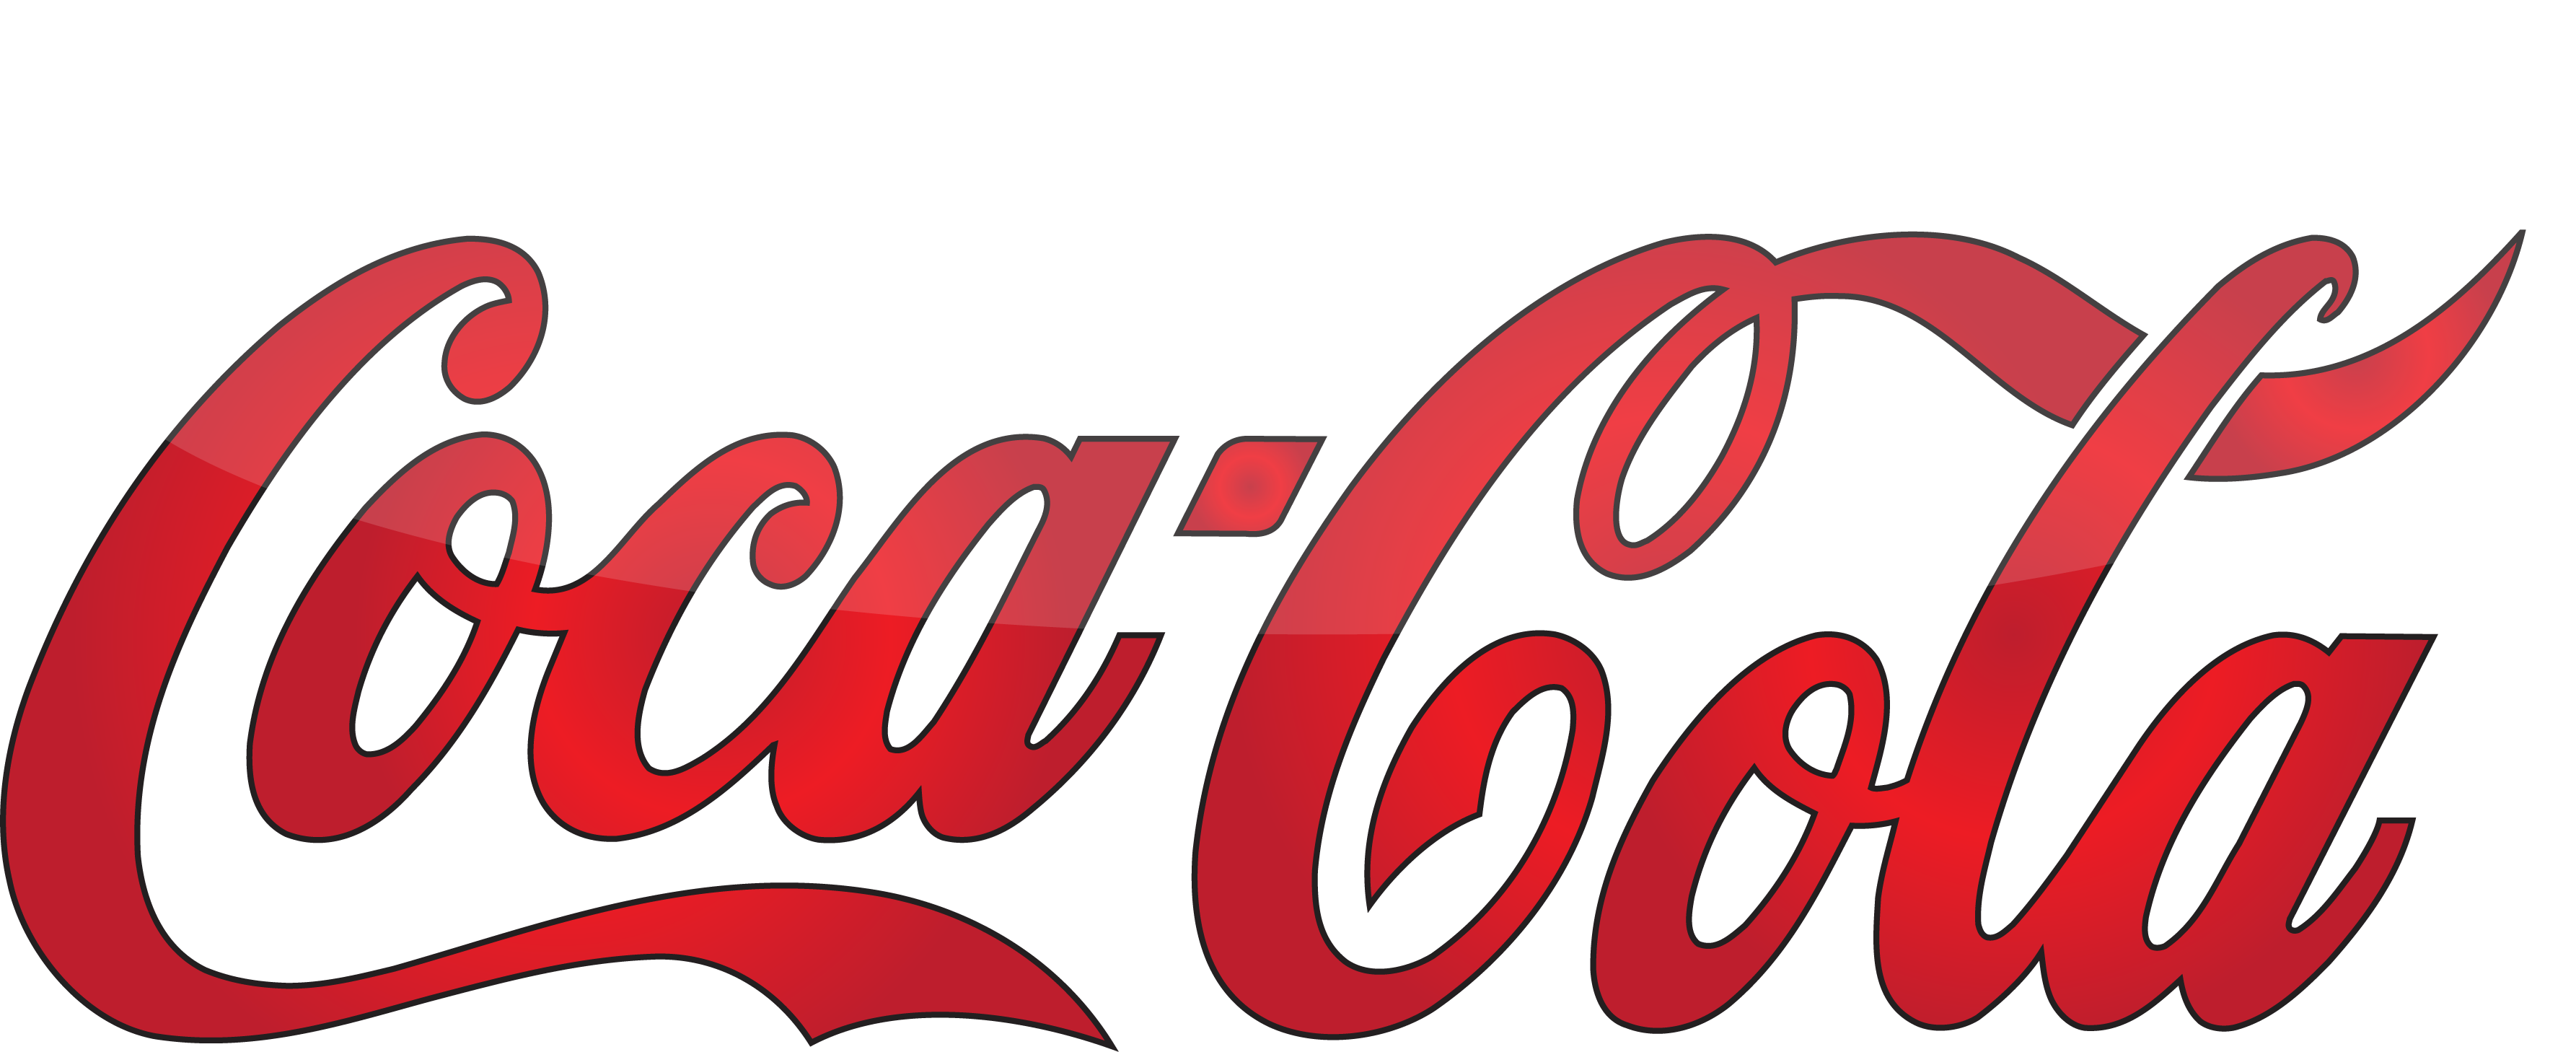 Coca Cola Logo Png Image - Cocacola, Transparent background PNG HD thumbnail